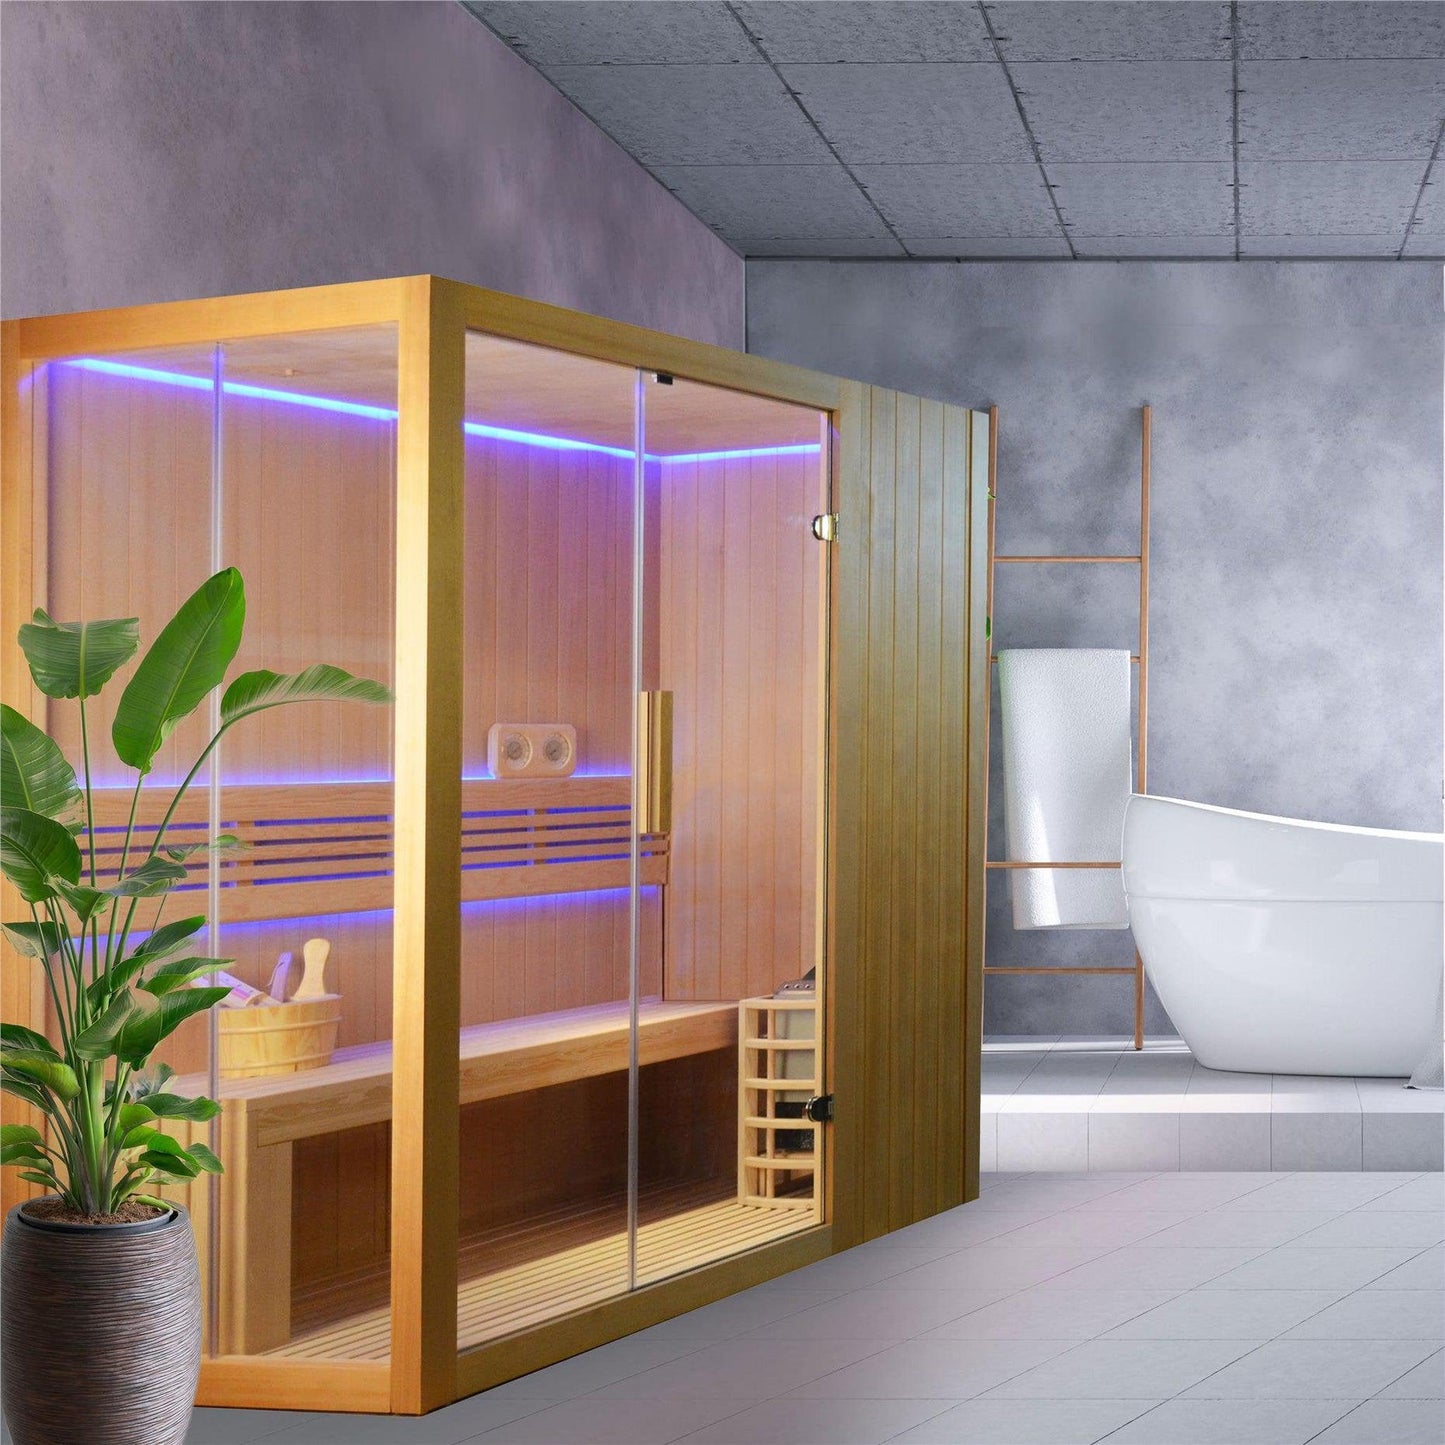 Aleko Canadian Hemlock 3-4 Person Indoor Wet Dry Steam Sauna With 4.5 kW ETL Certified Heater and LED Lights